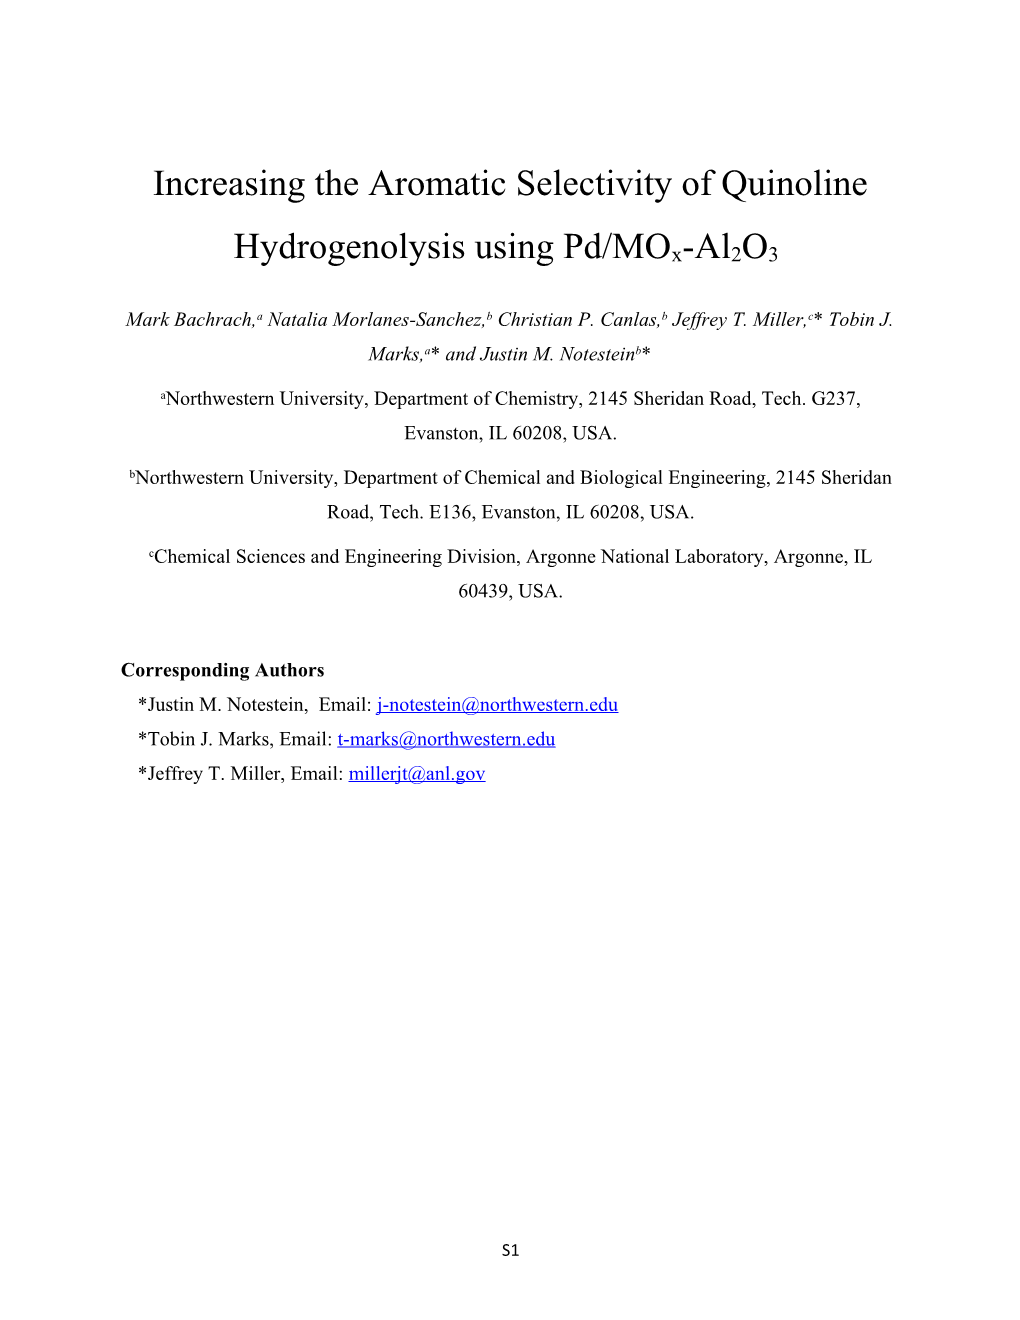 Increasing the Aromatic Selectivity of Quinoline Hydrogenolysis Using Pd/Mox-Al2o3